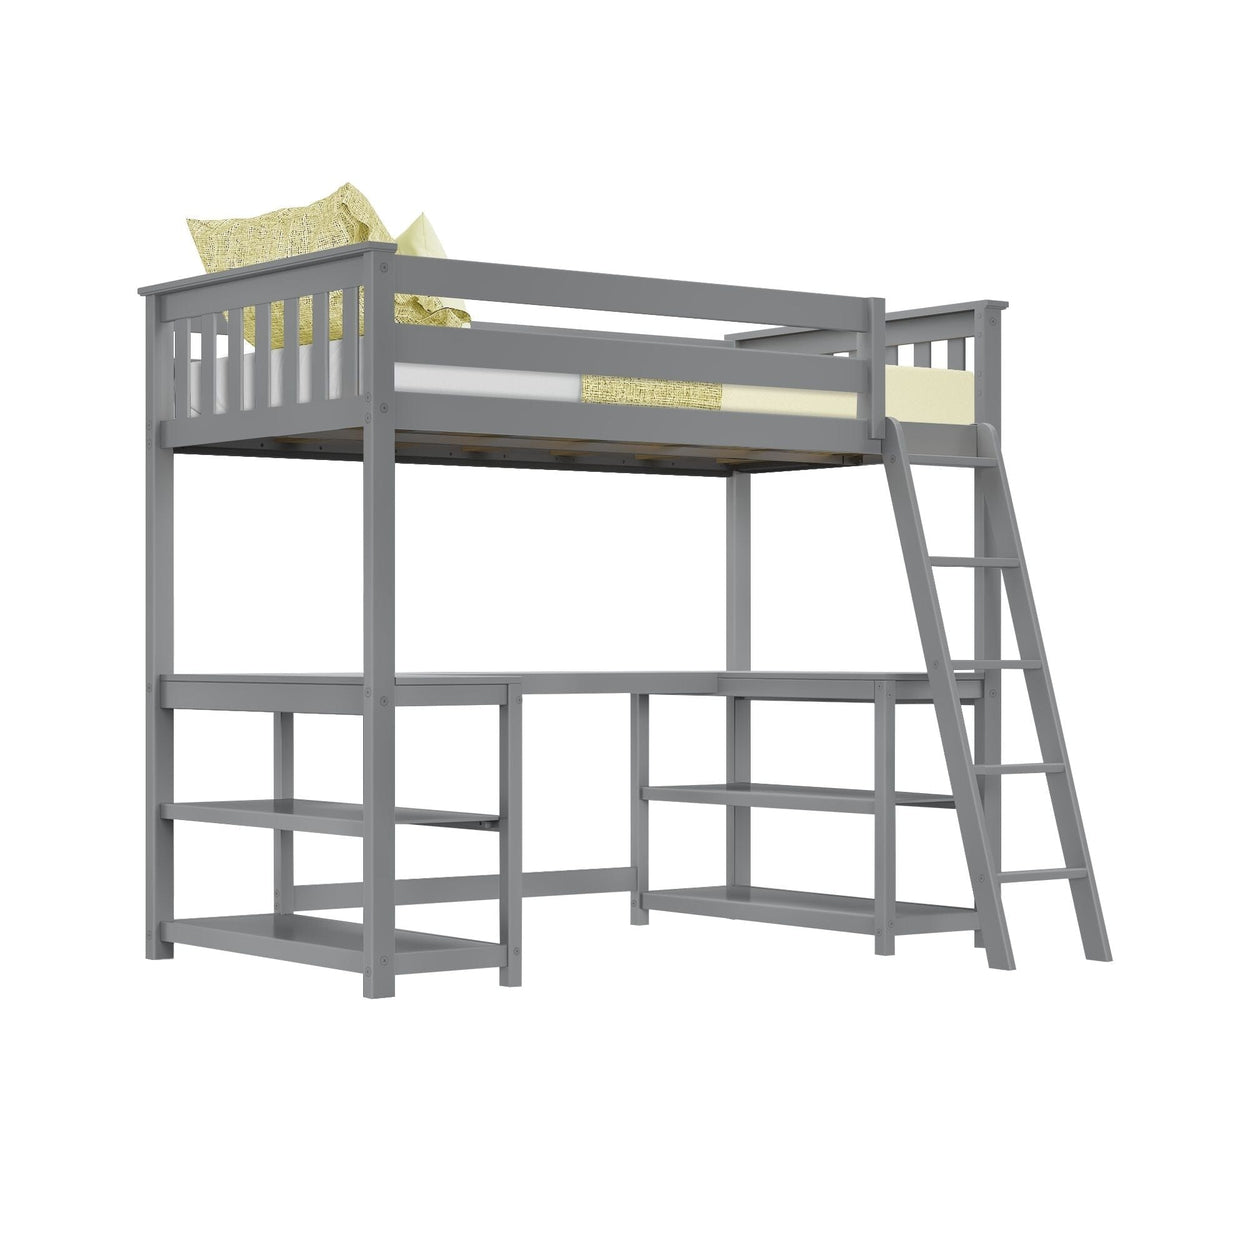 185227-121 : Storage & Study Loft Beds Twin-Size High Loft Bed with Wraparound Desk & Shelves, Grey